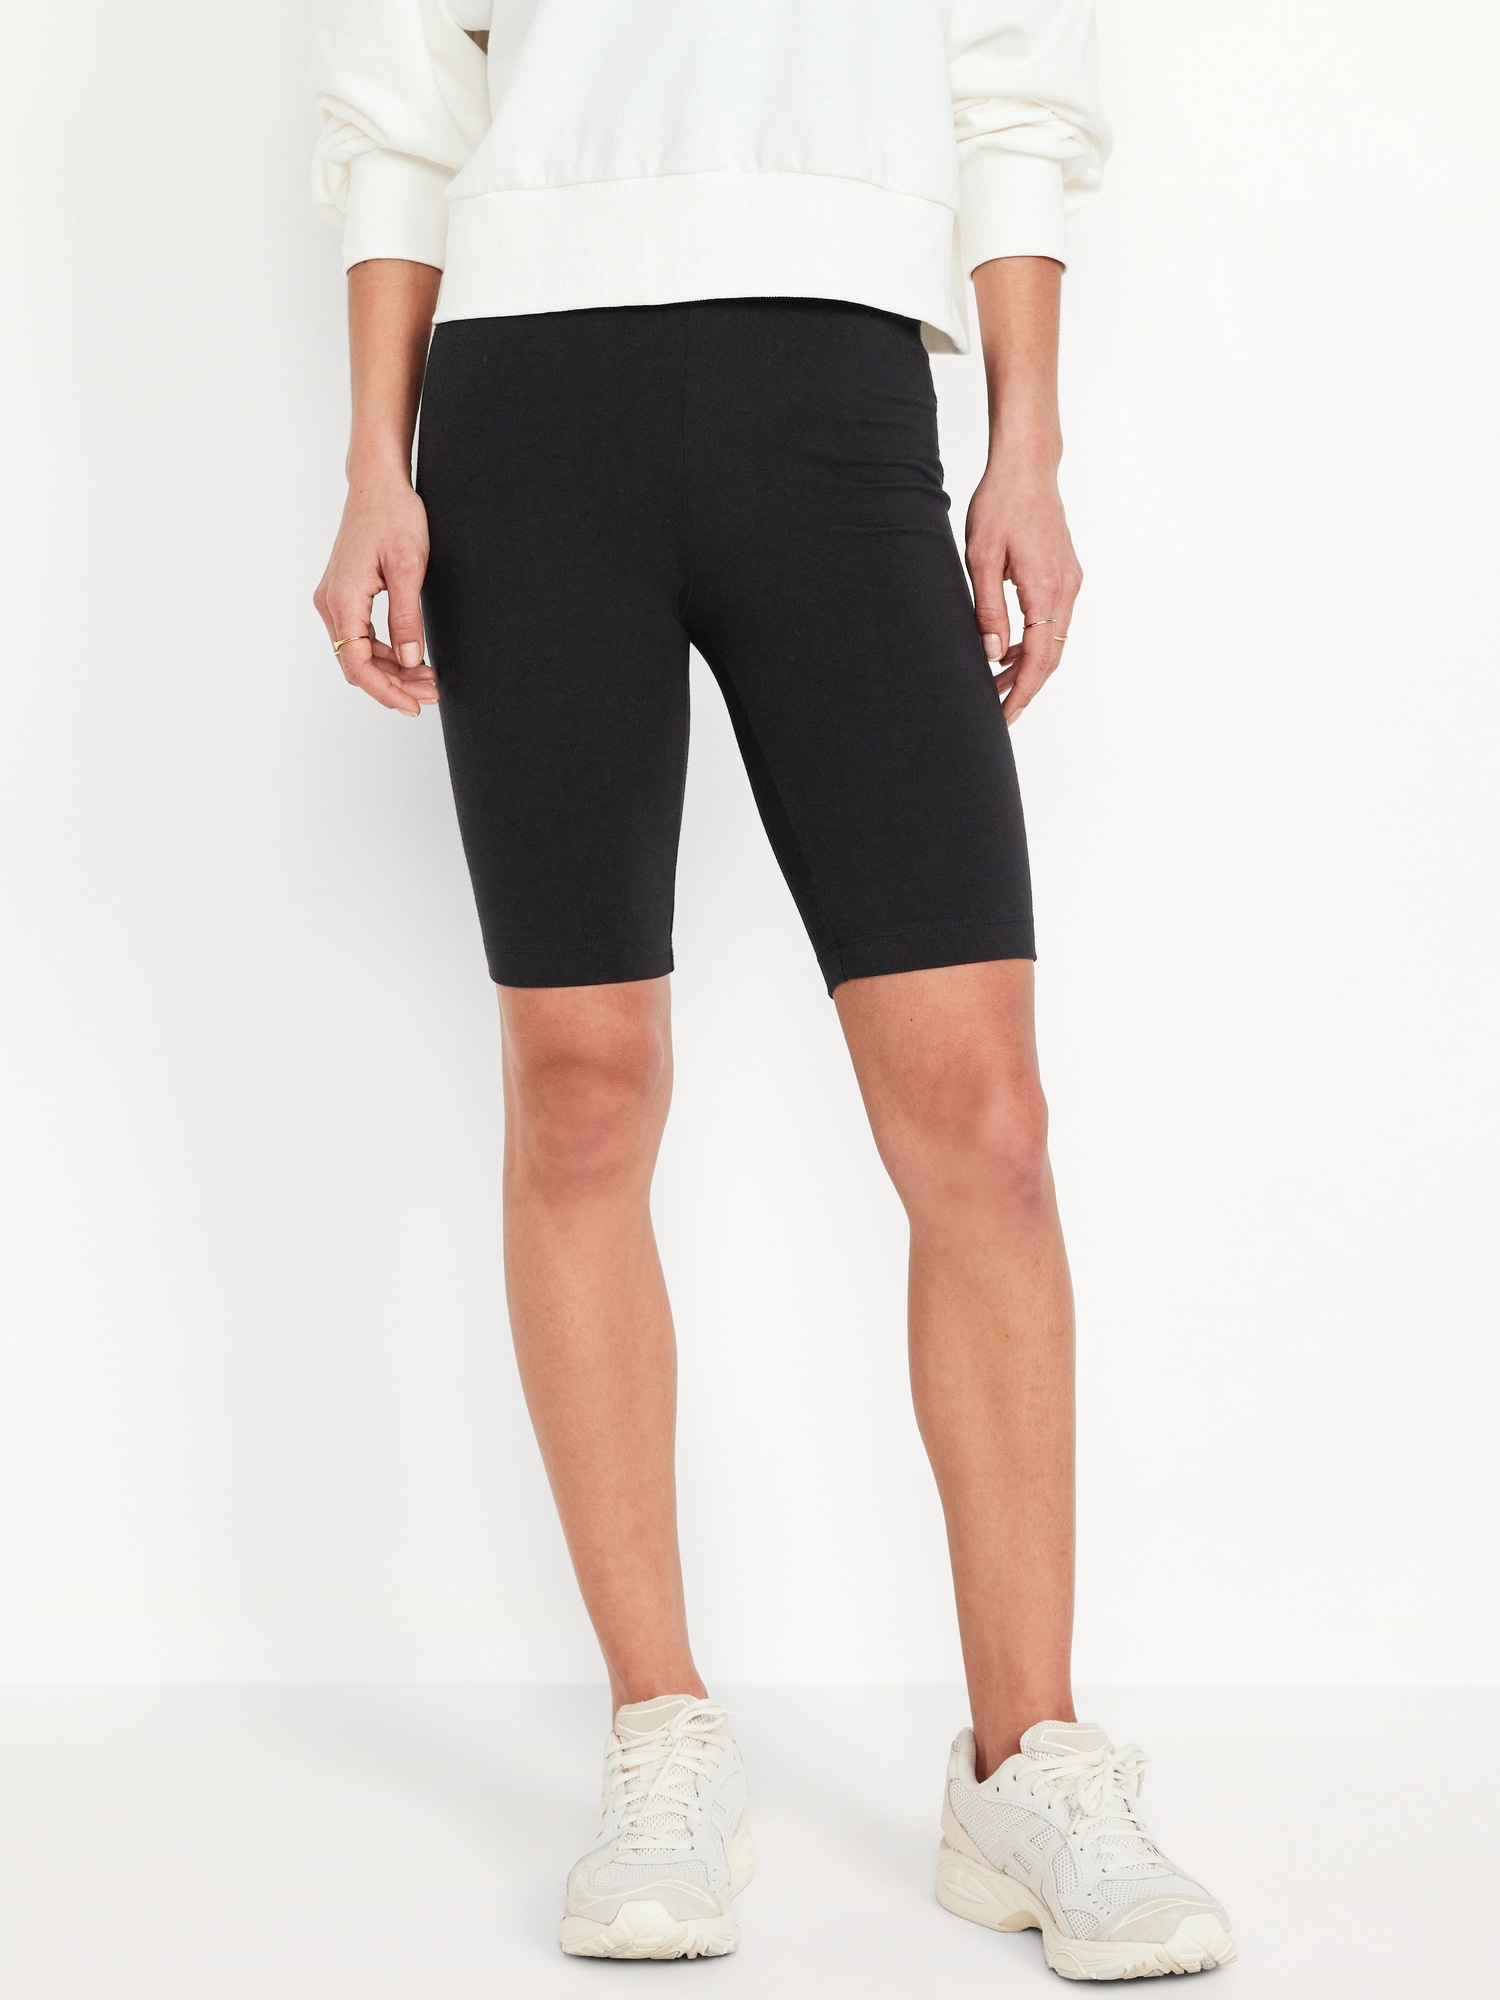 High-Waisted Biker Shorts - 10-inch inseam